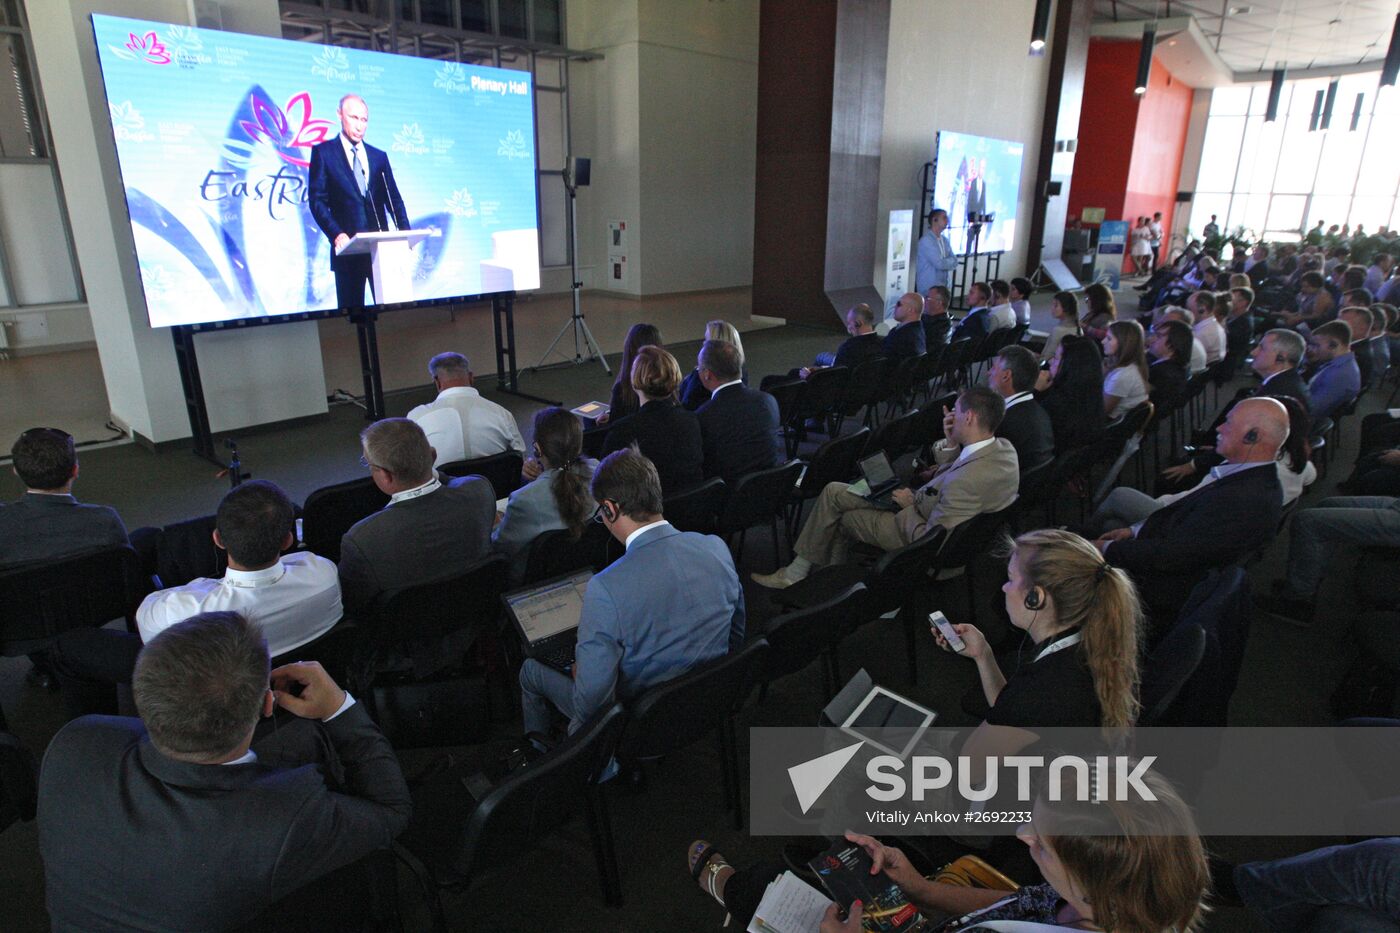 Russian President Vladimir Putin attends first Eastern Economic Forum